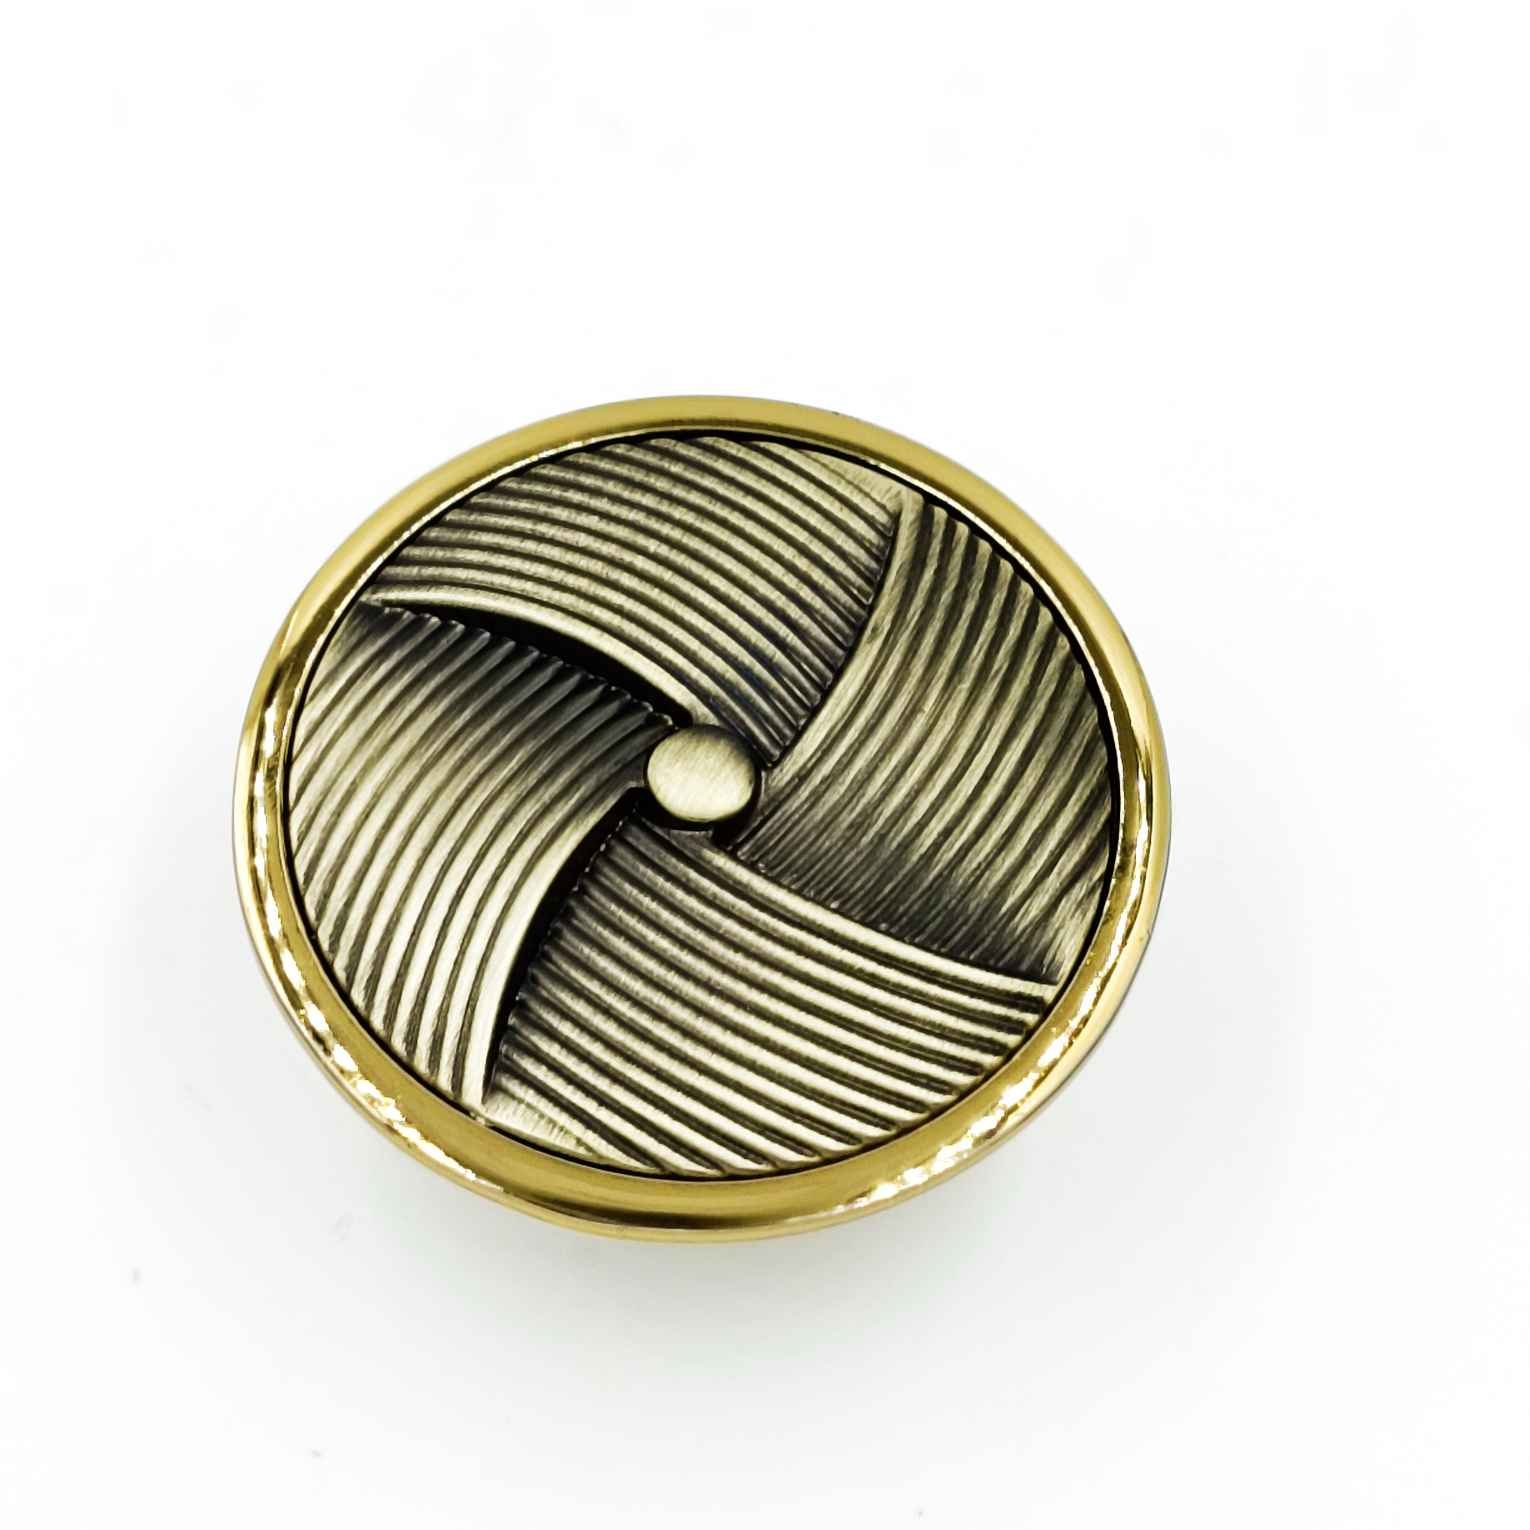 Fancy Drawer knob round 2 inch DK207 Antique/gold,Black,Gold/white finish  (1079) - Gold/white